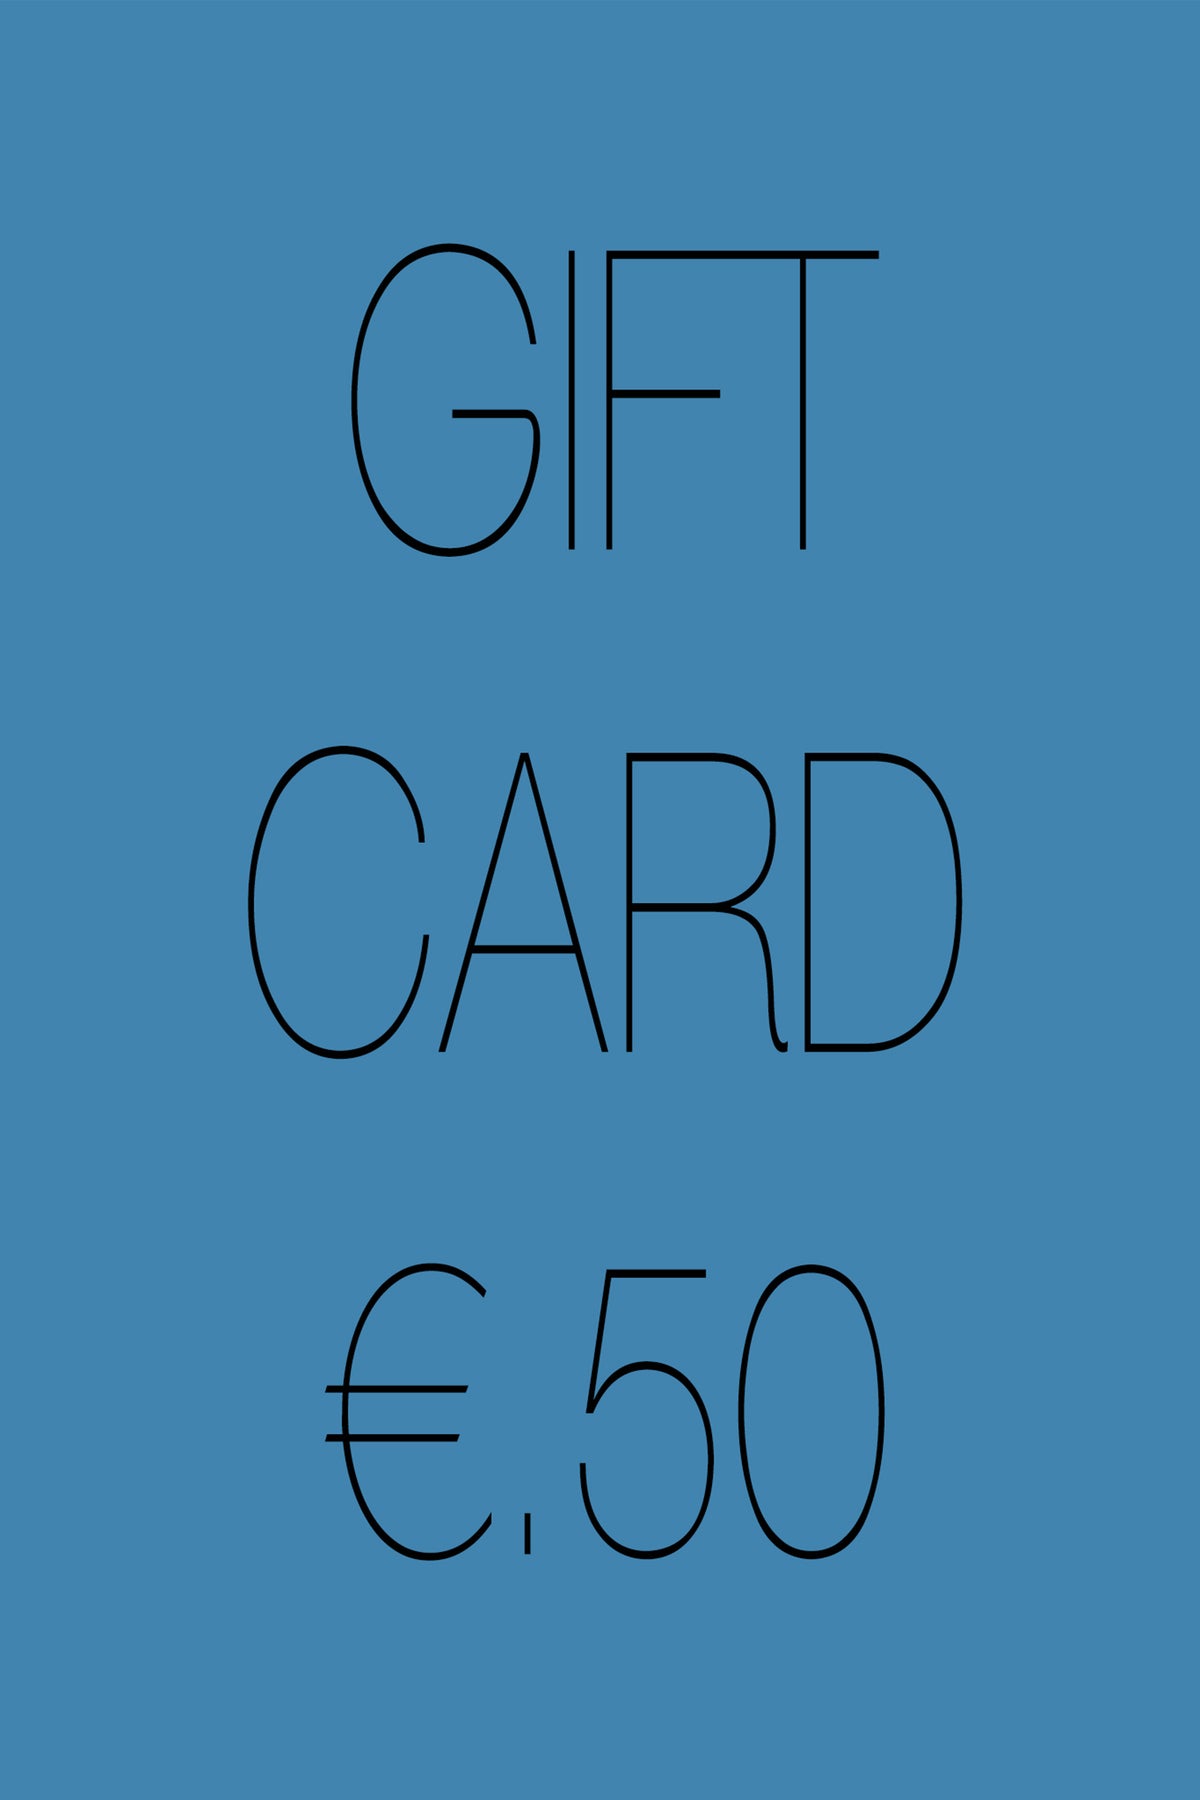 GIFT CARD €.50,00